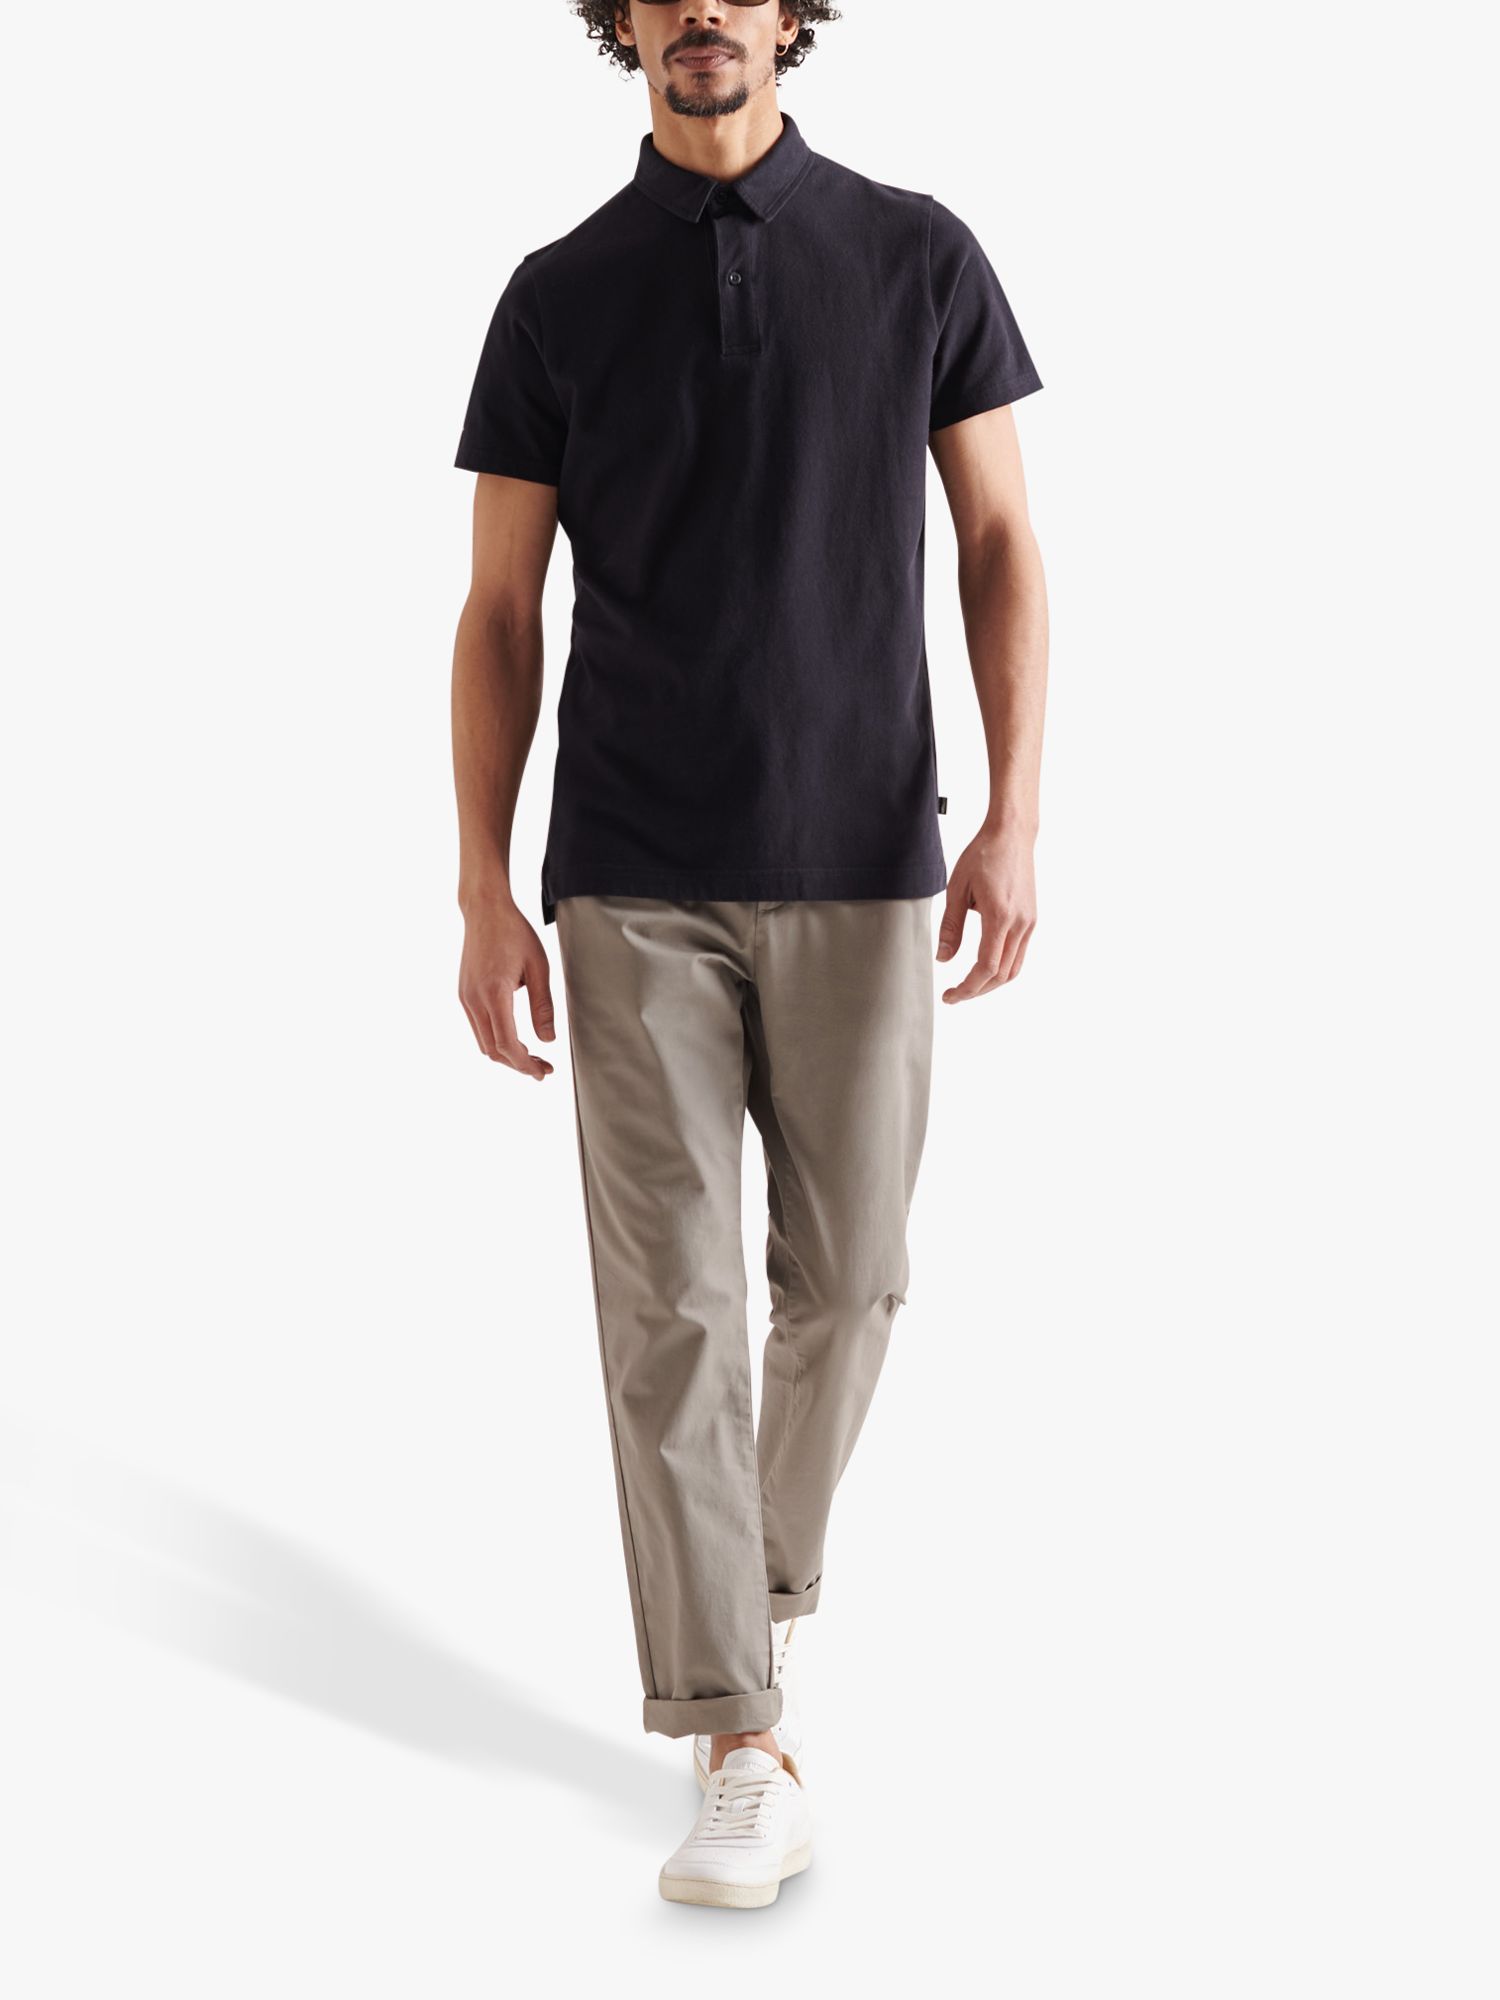 Superdry Studios Short Sleeve Polo Shirt, Black, S